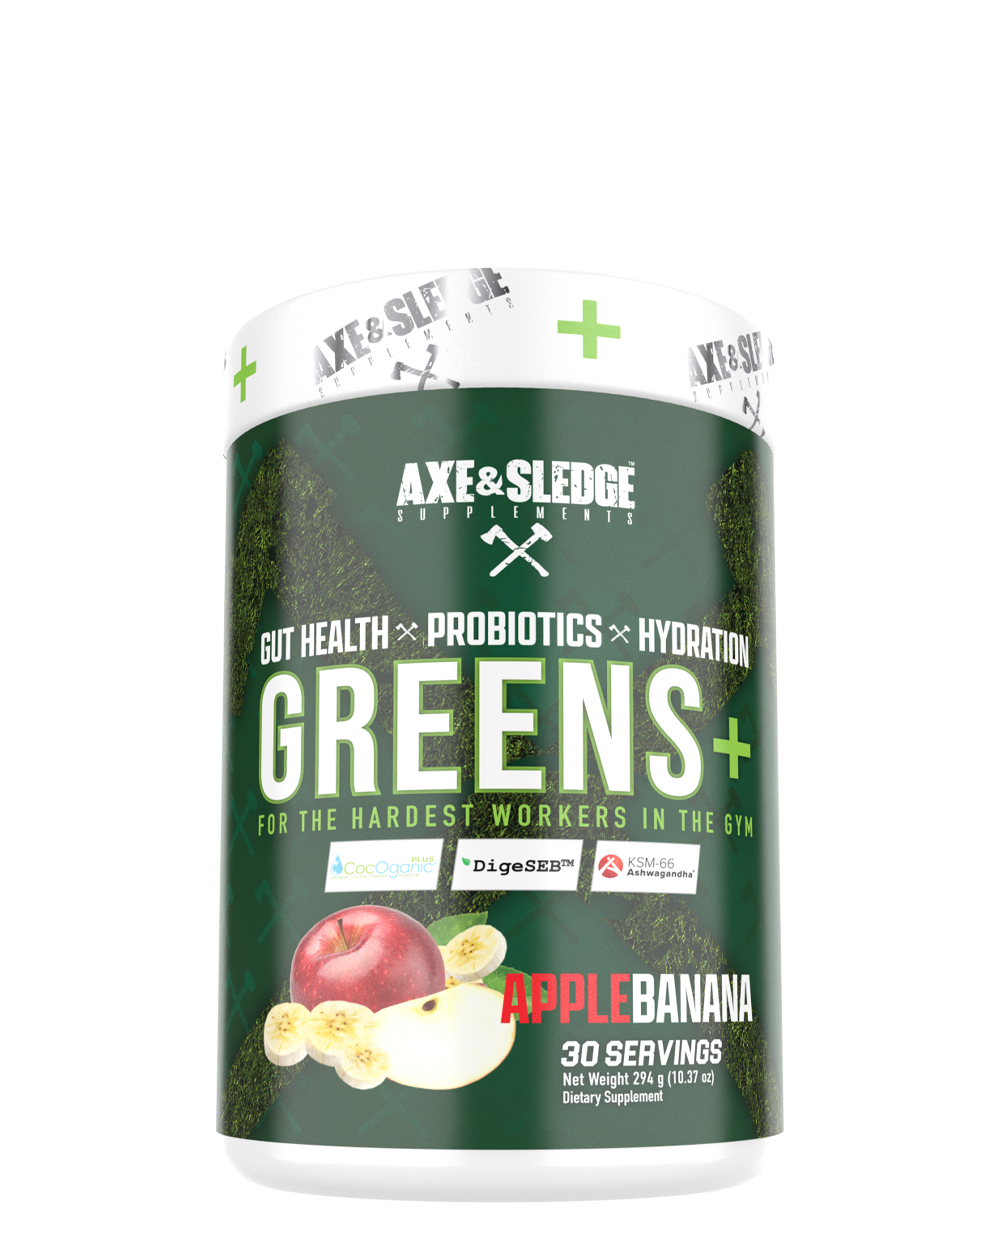 Axe & Sledge Greens Superfood Powder